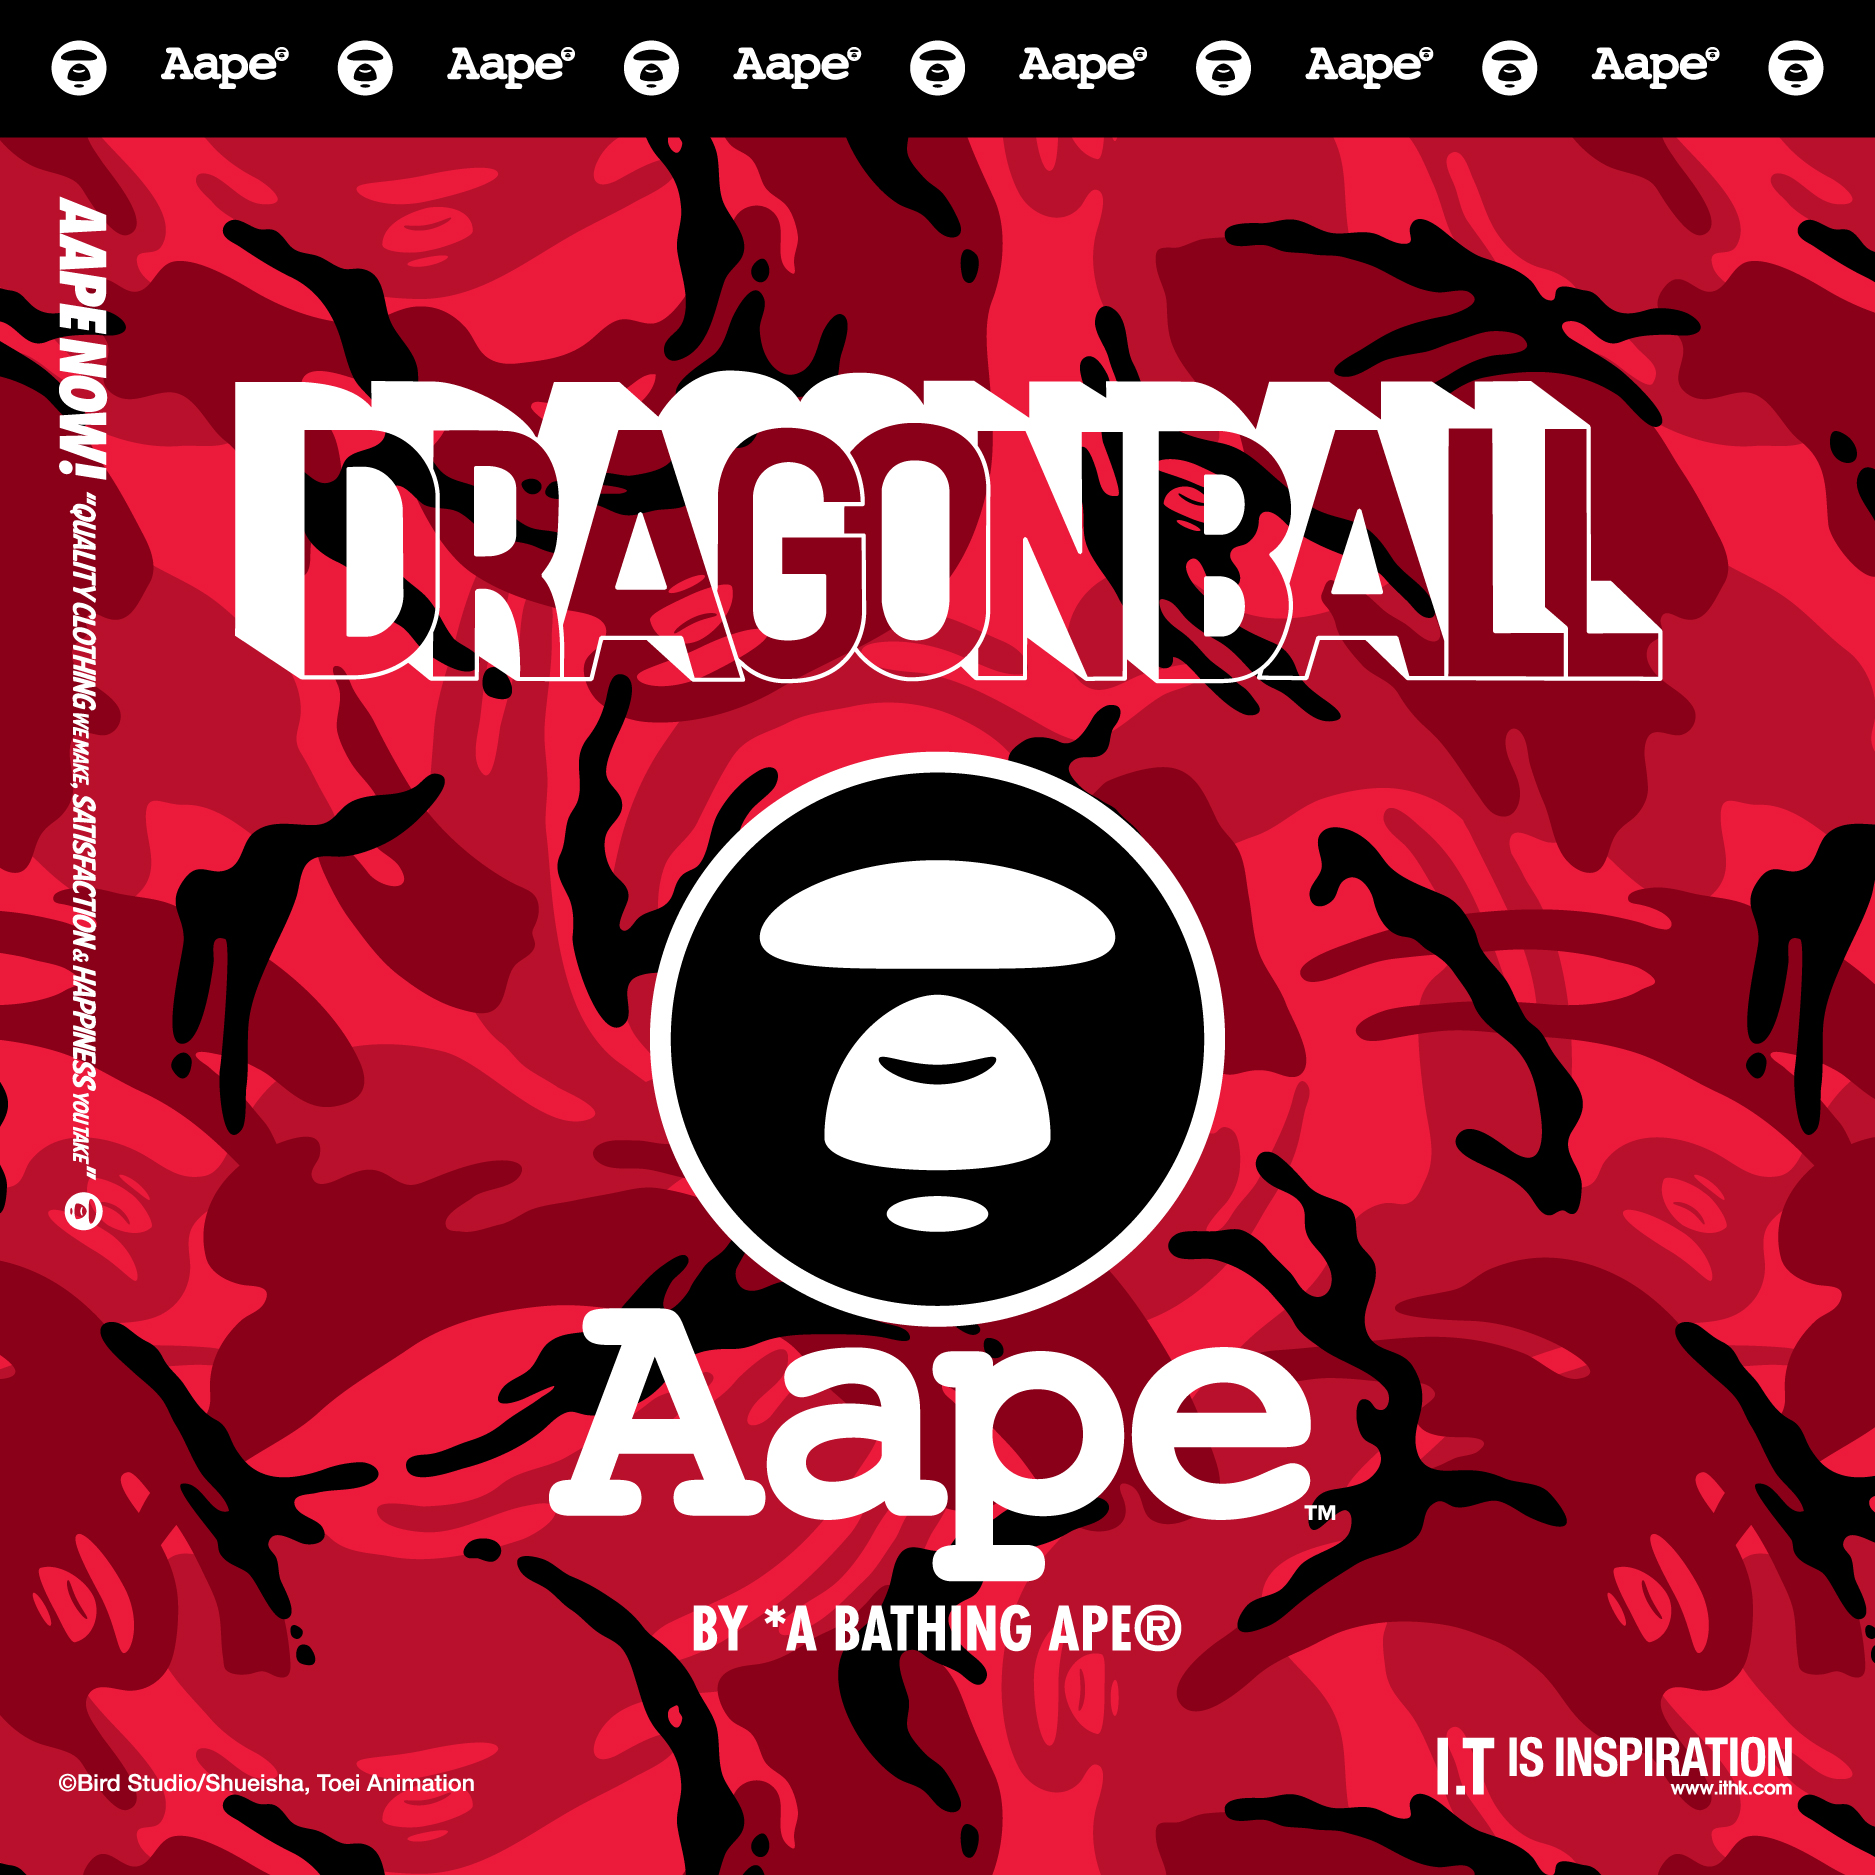 Aape x Dragon ball post